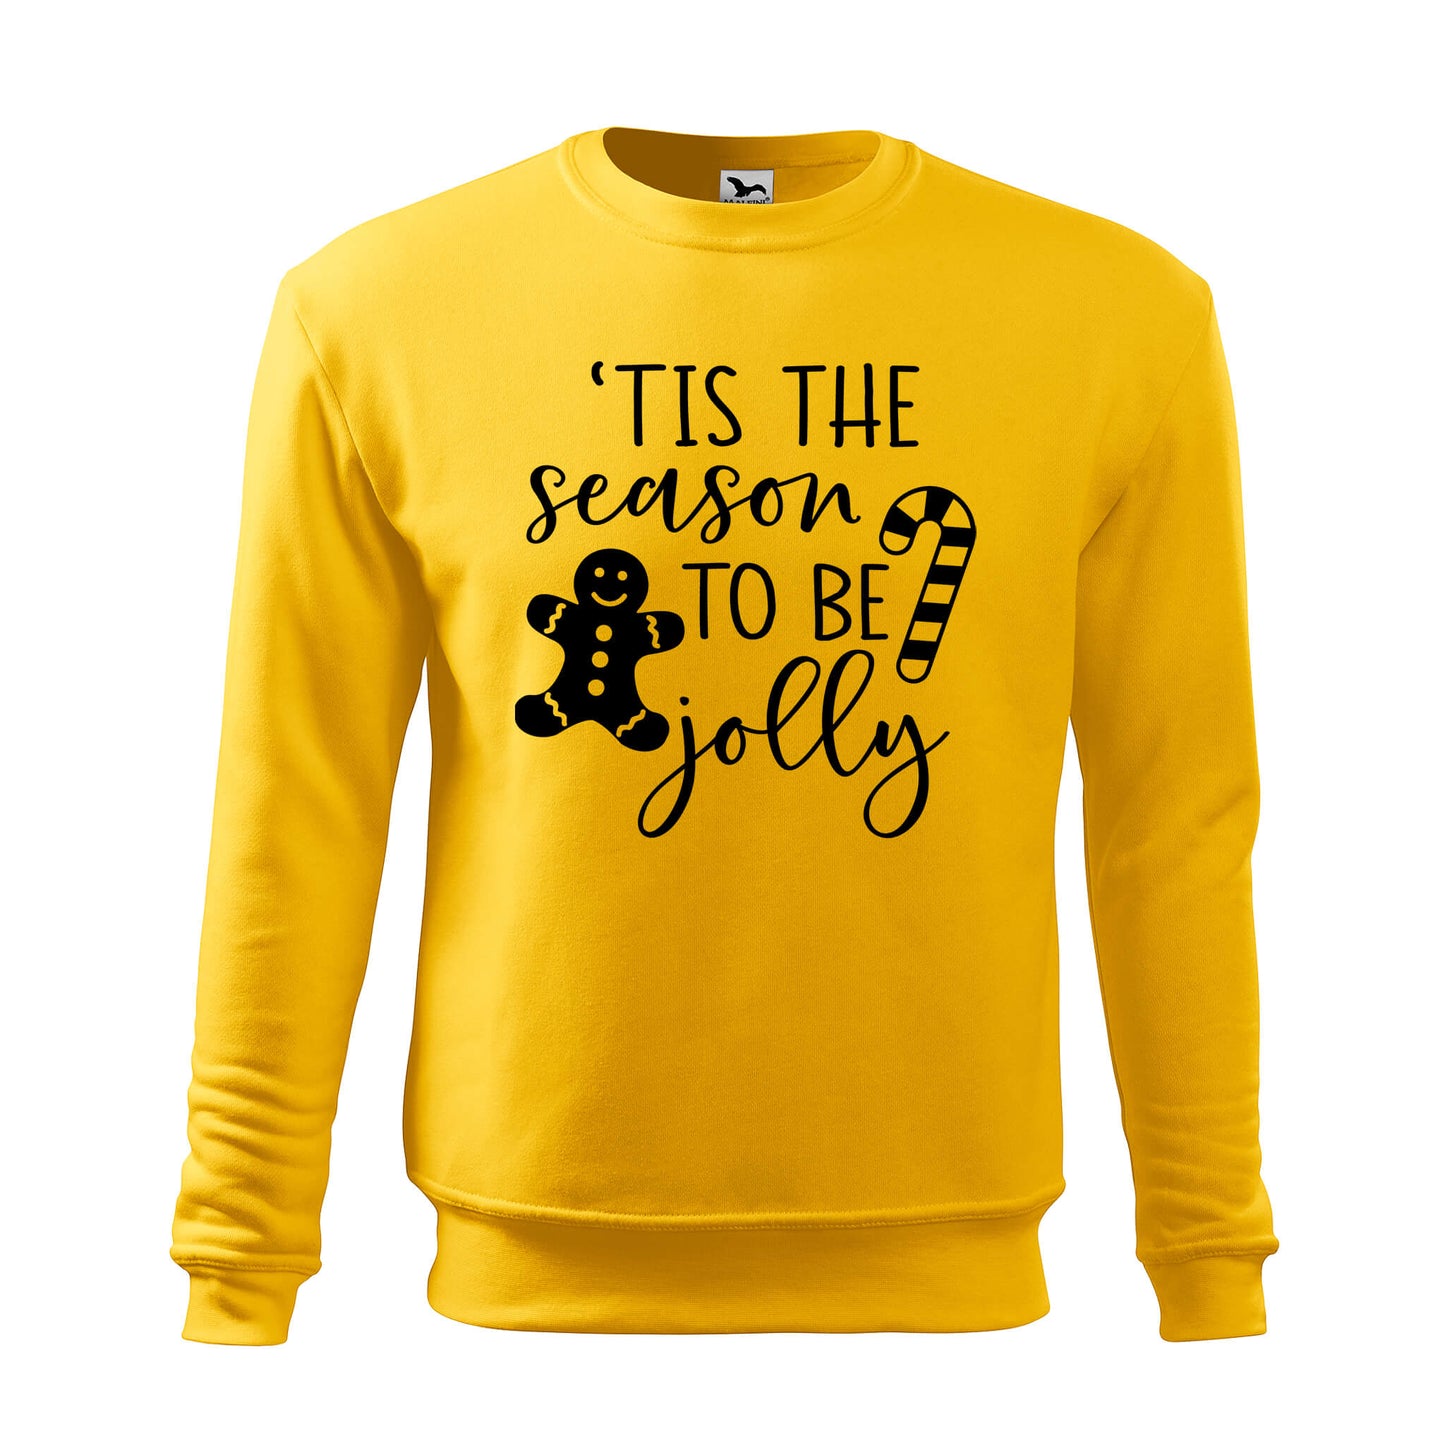 Tis the season to be jolly sweatshirt - rvdesignprint